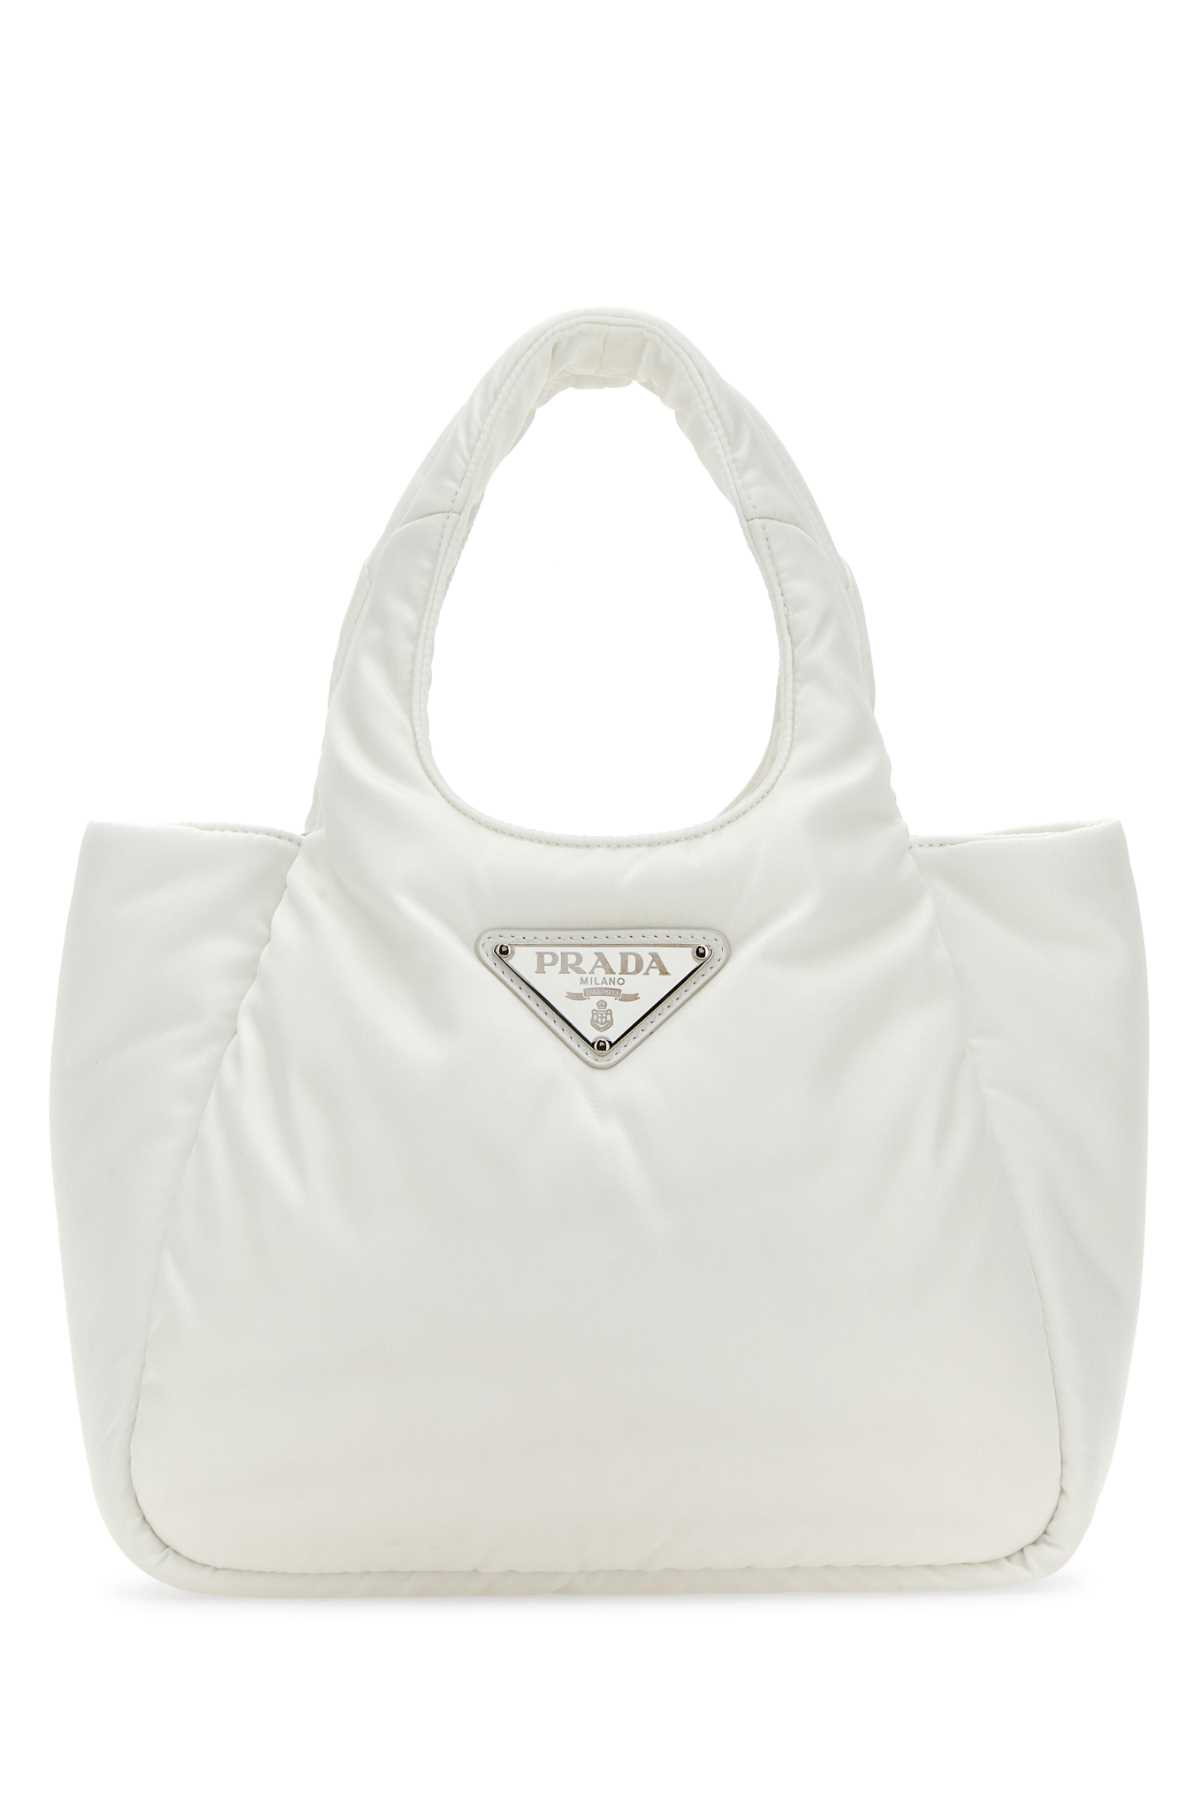 Prada White Nylon Handbag